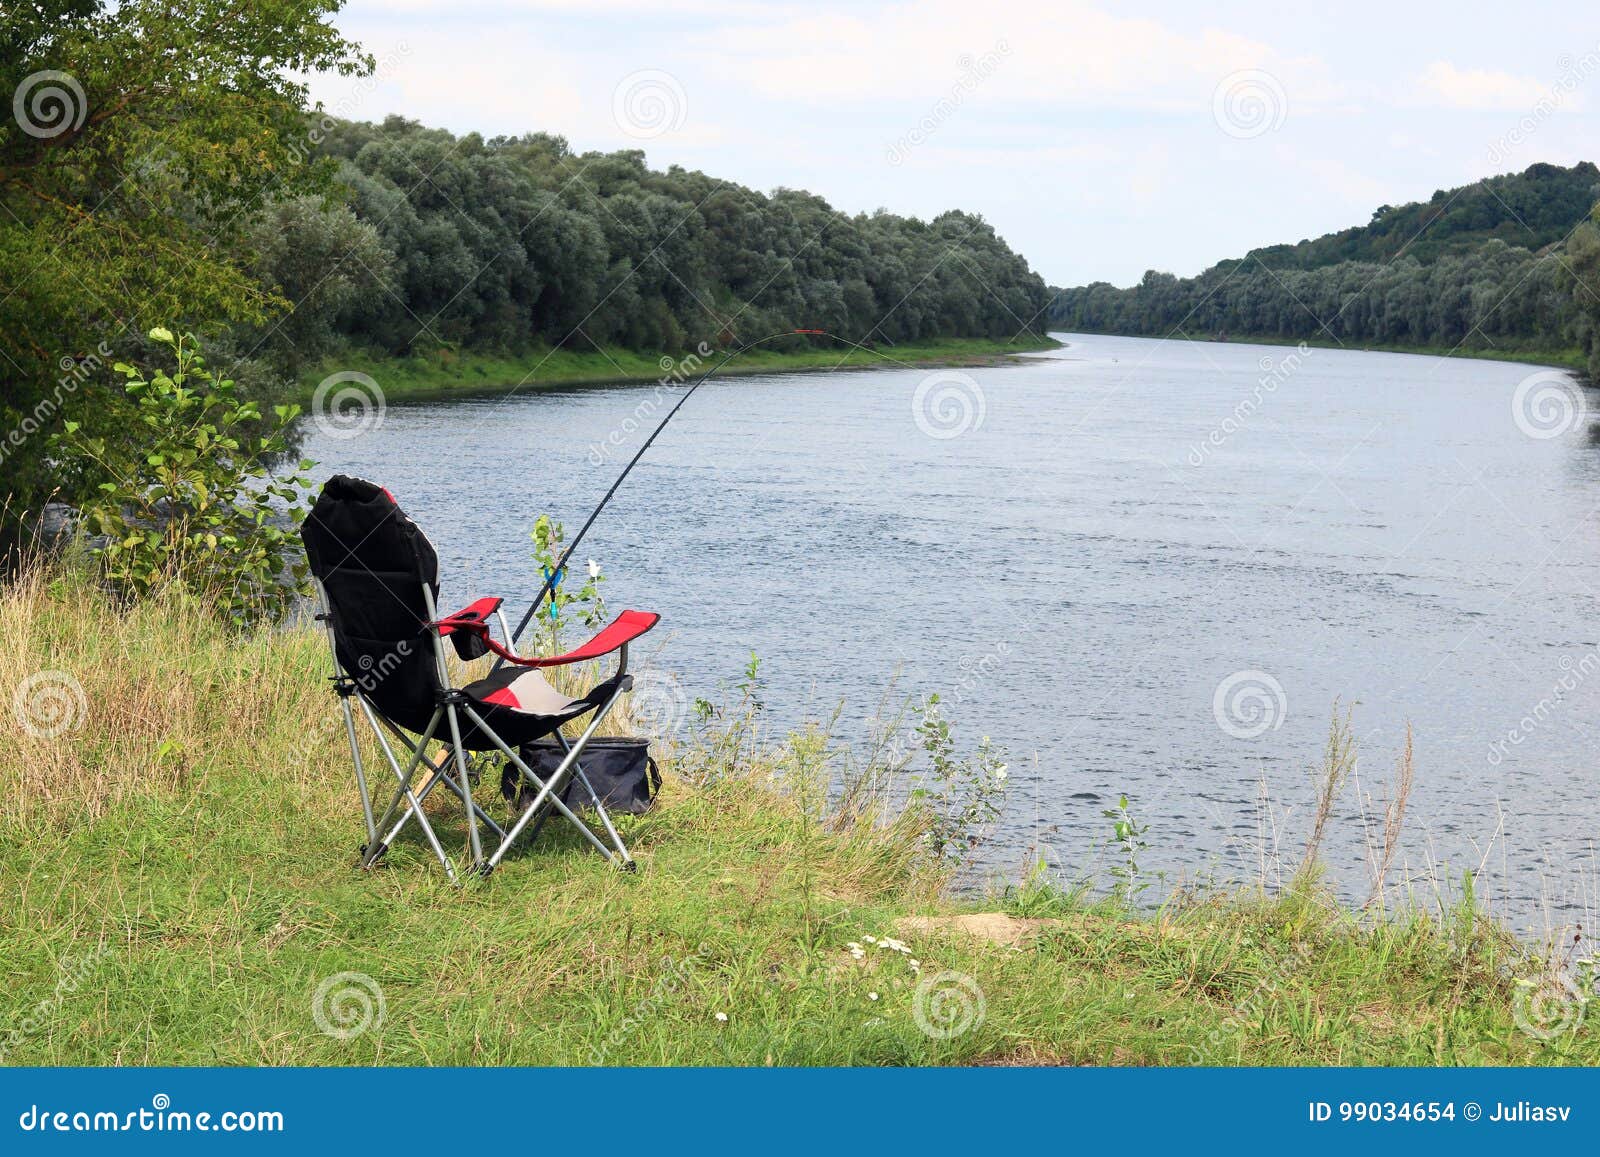 https://thumbs.dreamstime.com/z/fishing-chair-rod-bait-river-bank-autumn-99034654.jpg